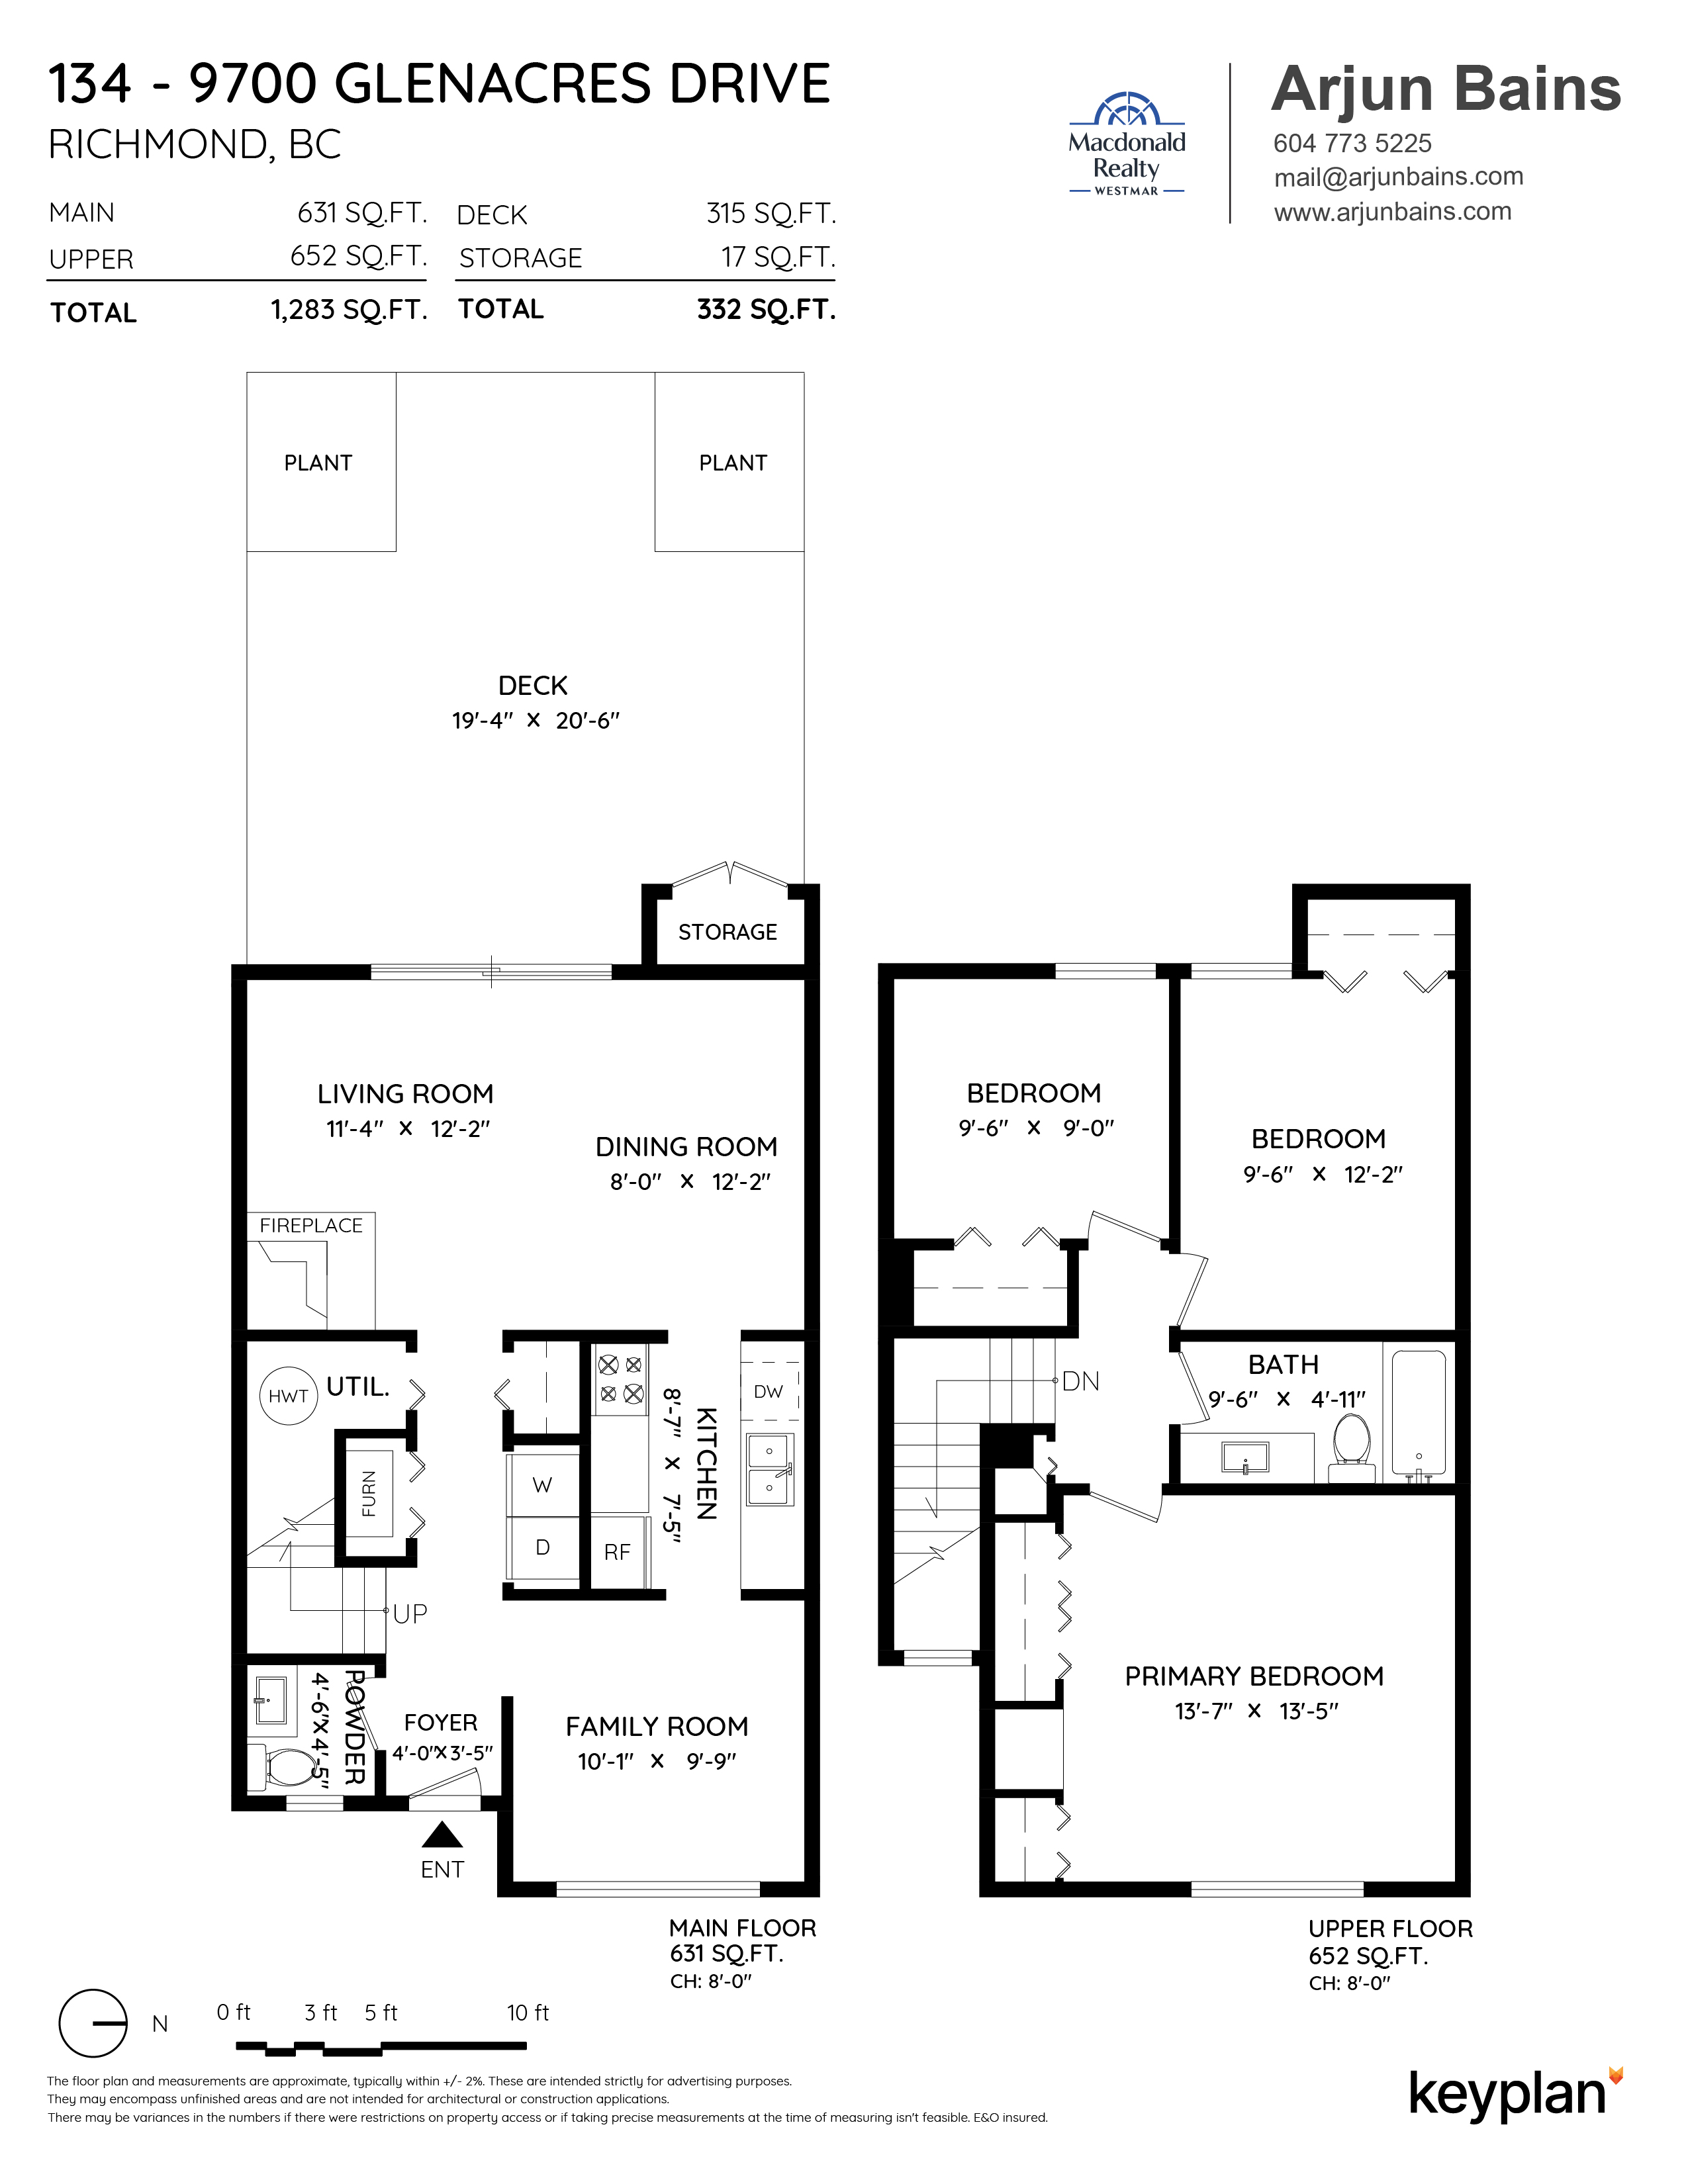 Arjun Bains - Unit 134 - 9700 Glenacres Drive, Richmond, BC, Canada | Floor Plan 1